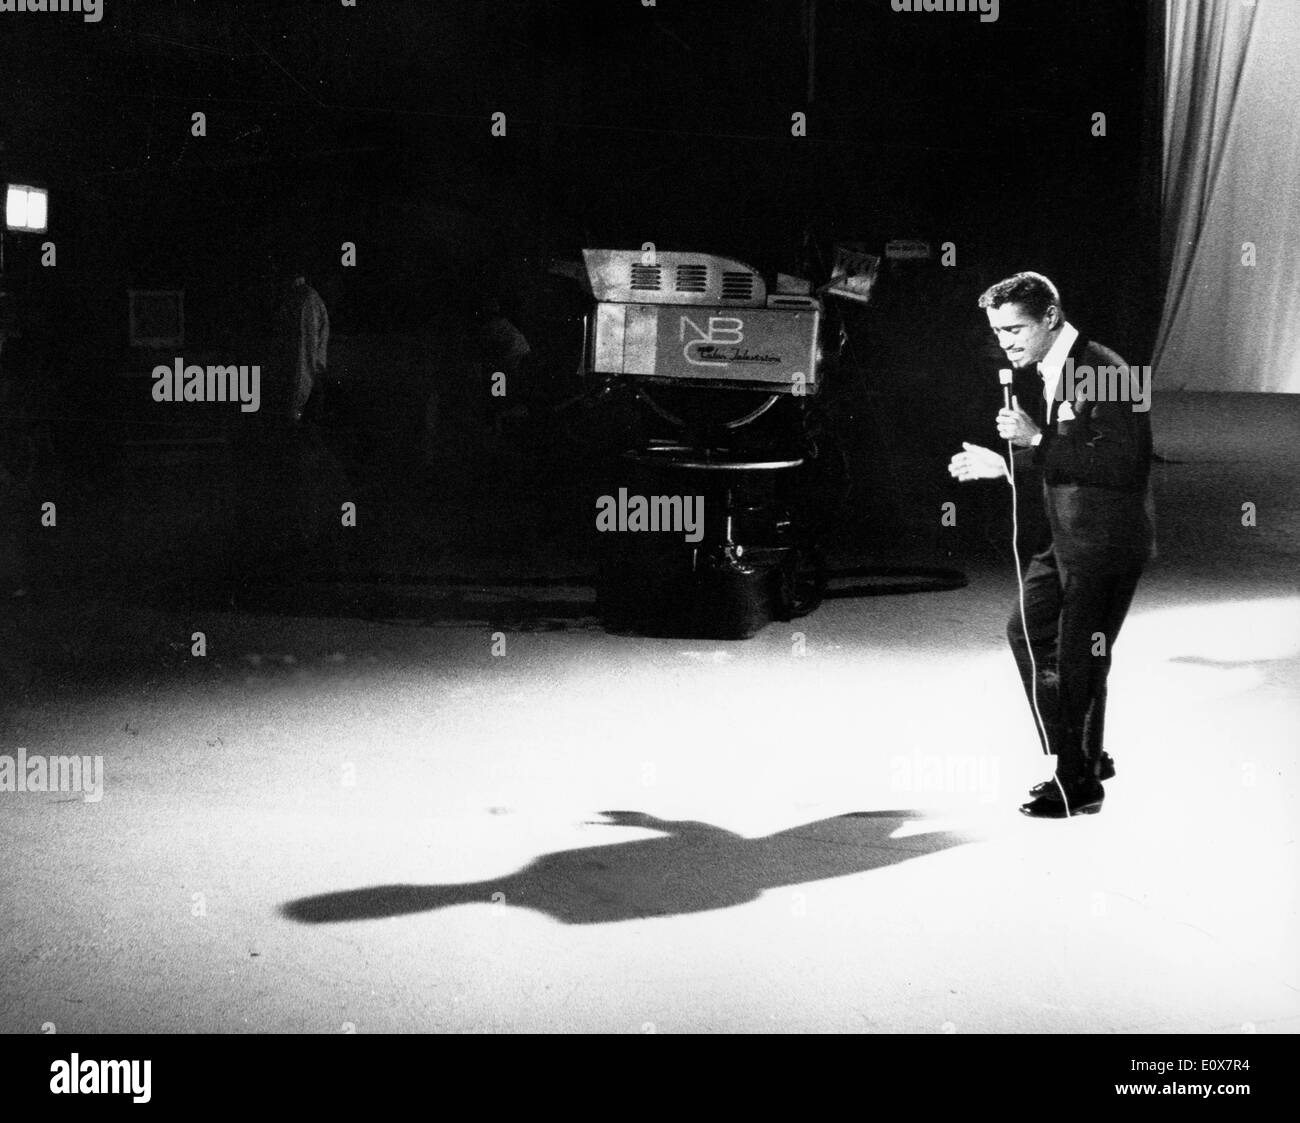 Sammy Davis Jr. on set of a television show Stock Photo